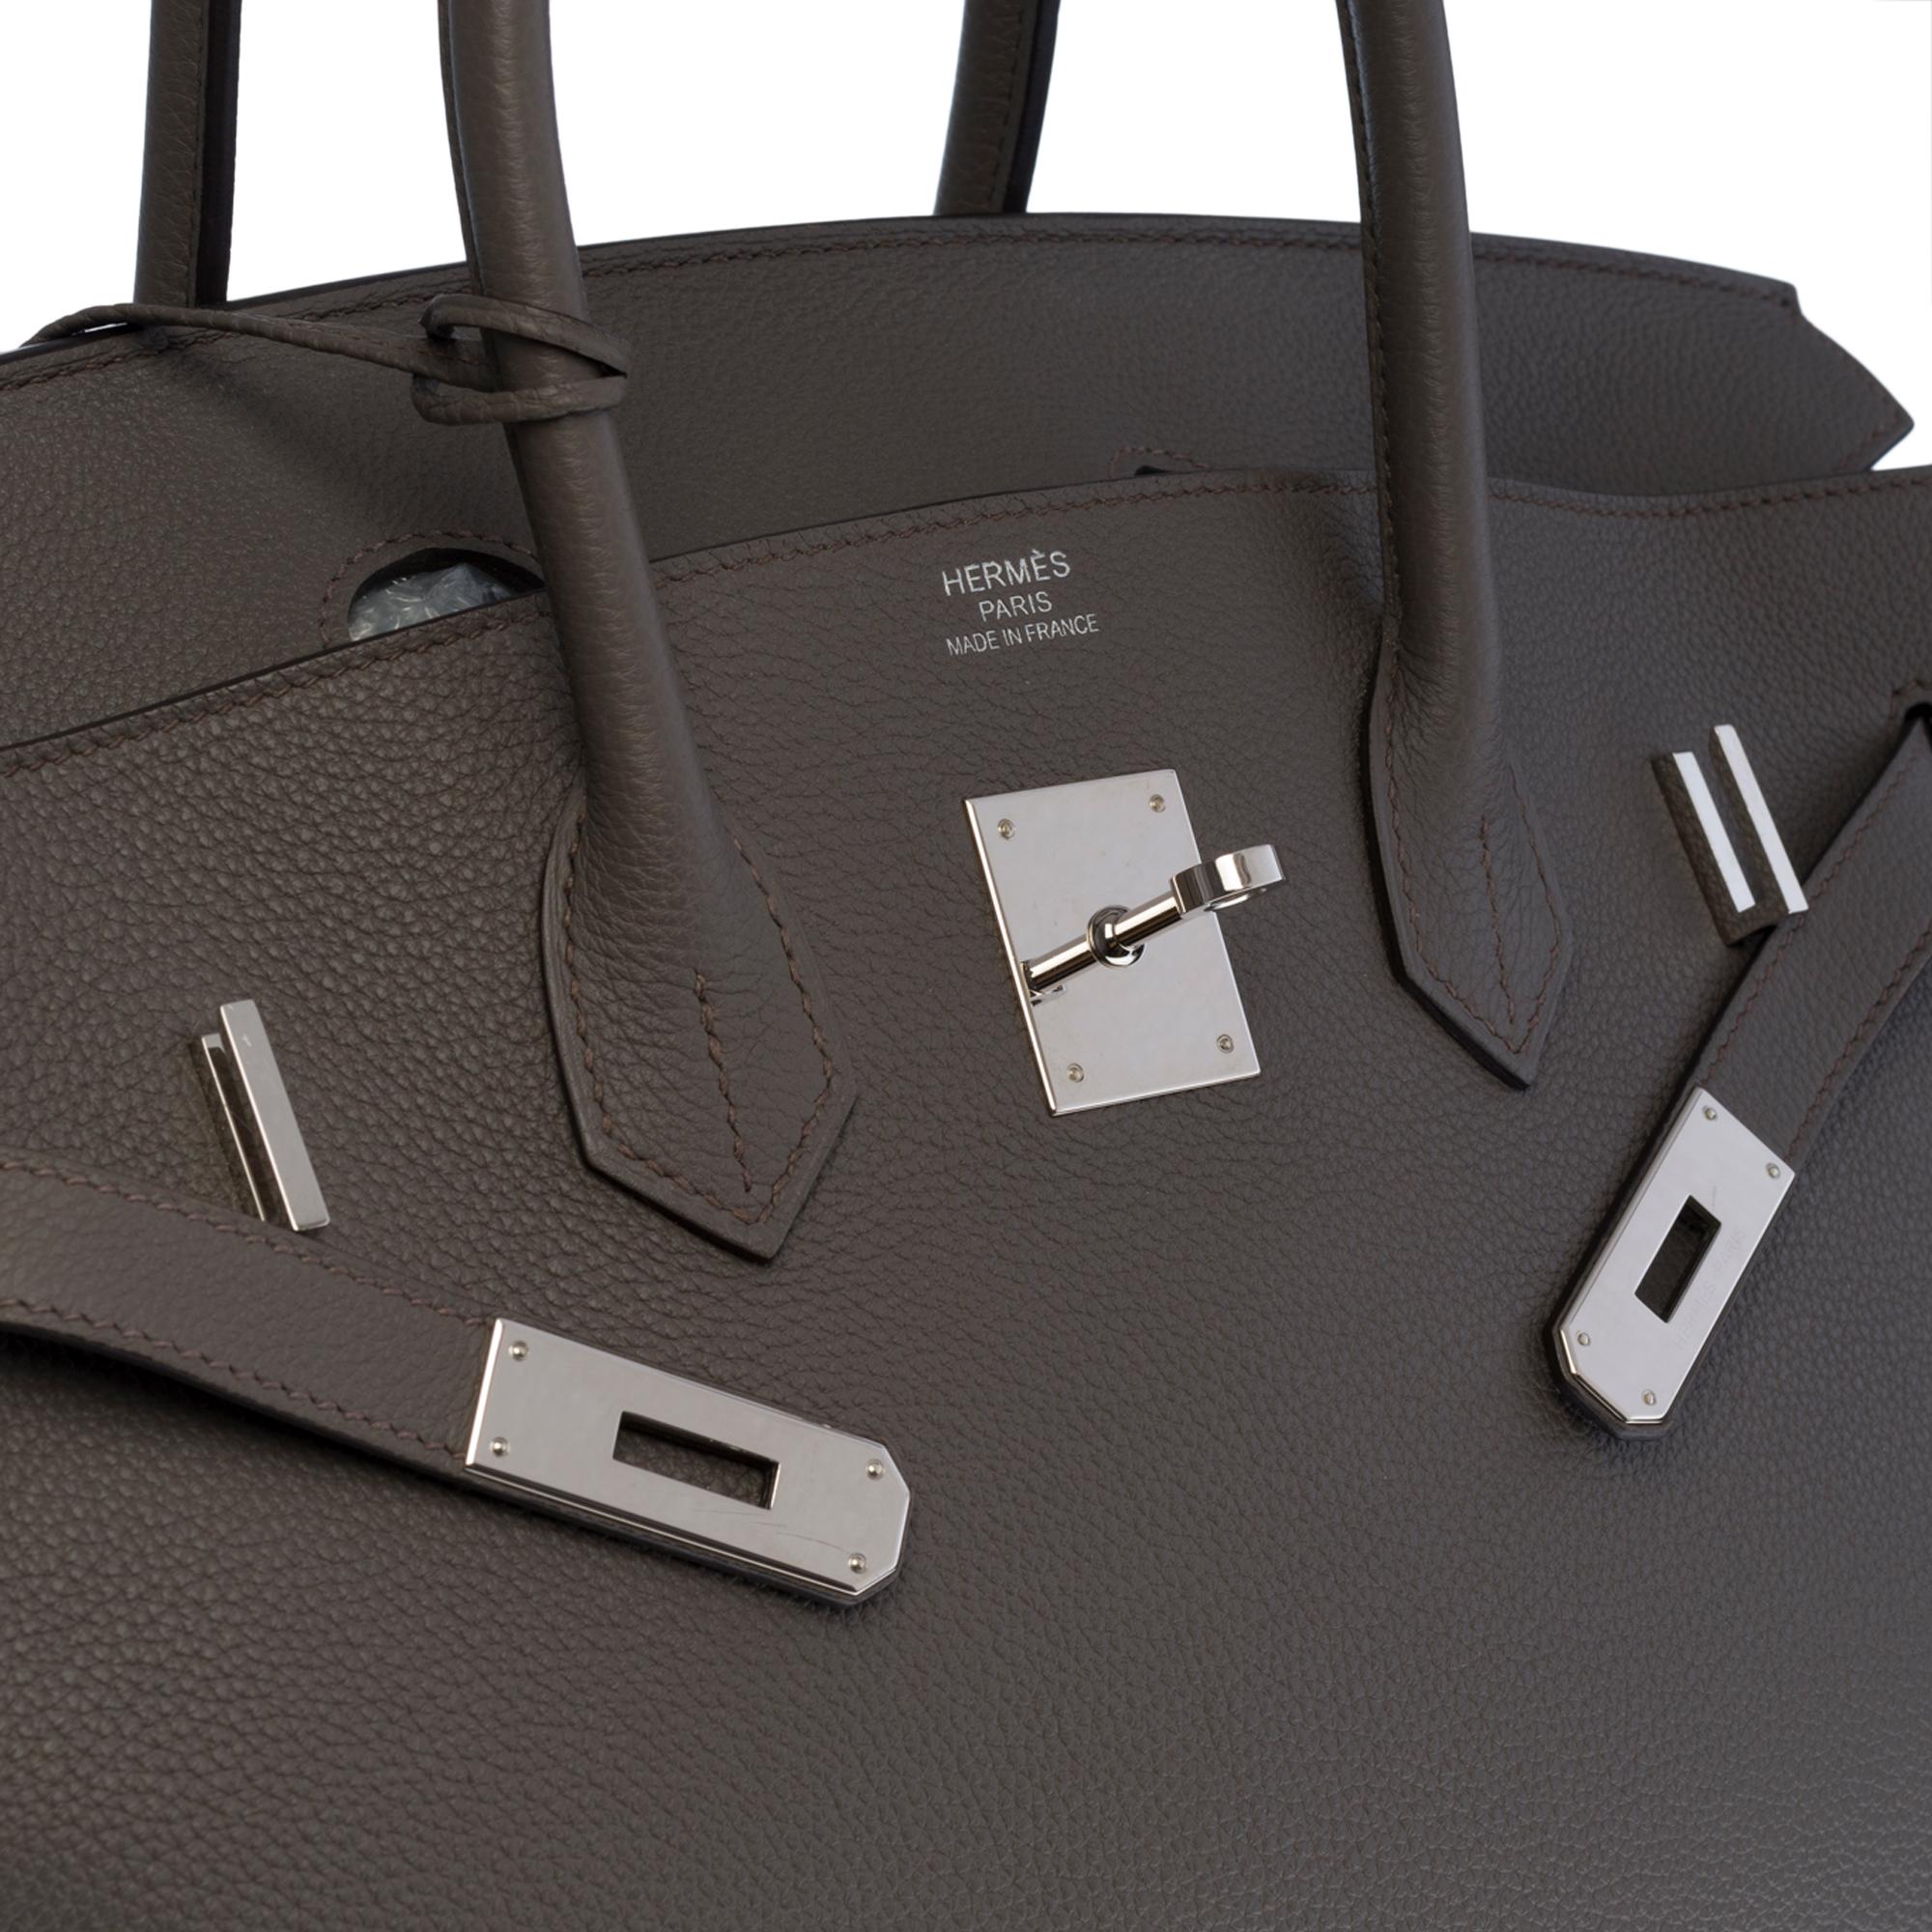 Women's or Men's Almost New -Full set-Hermès Birkin 35 handbag in Etain Togo leather, SHW